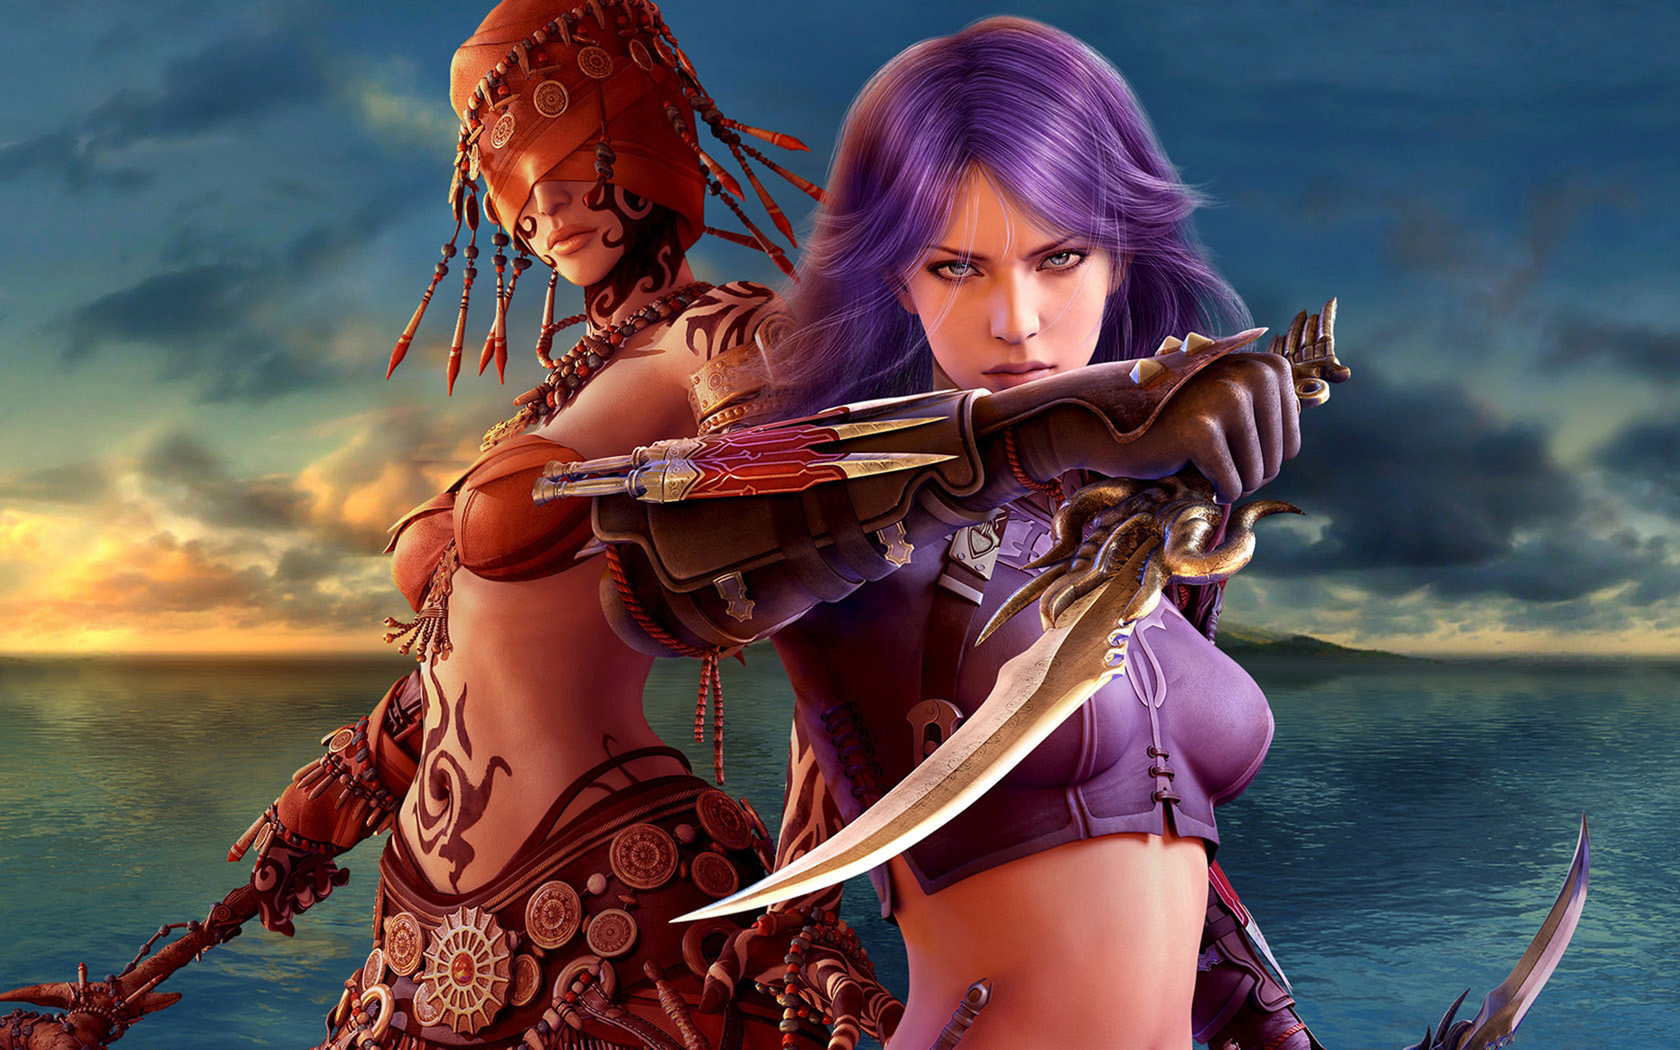 Fantasy Female Warrior Puter Desktop Wallpaper Pictures Image